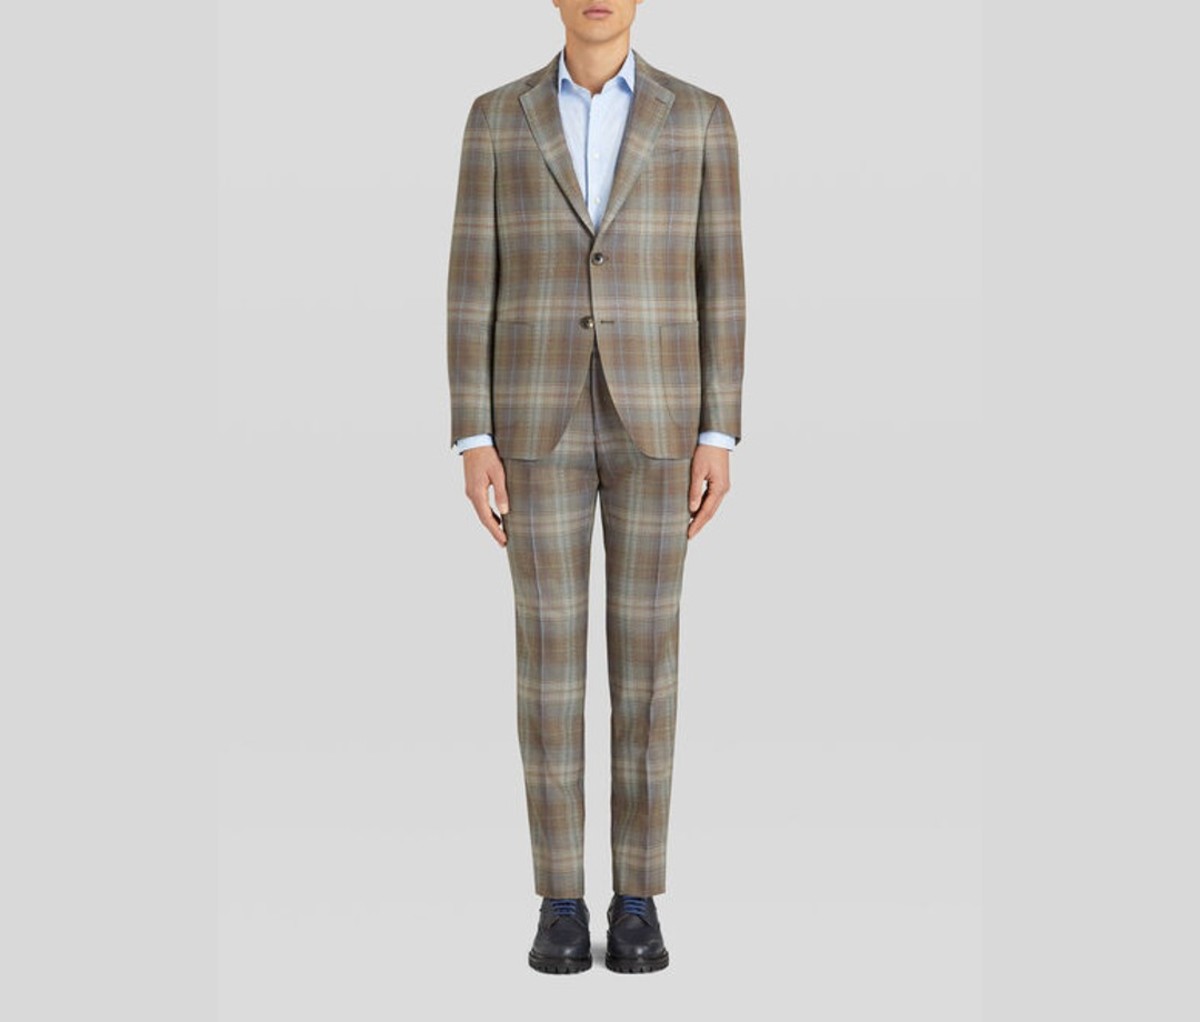 Etro—Tailored Check Suit